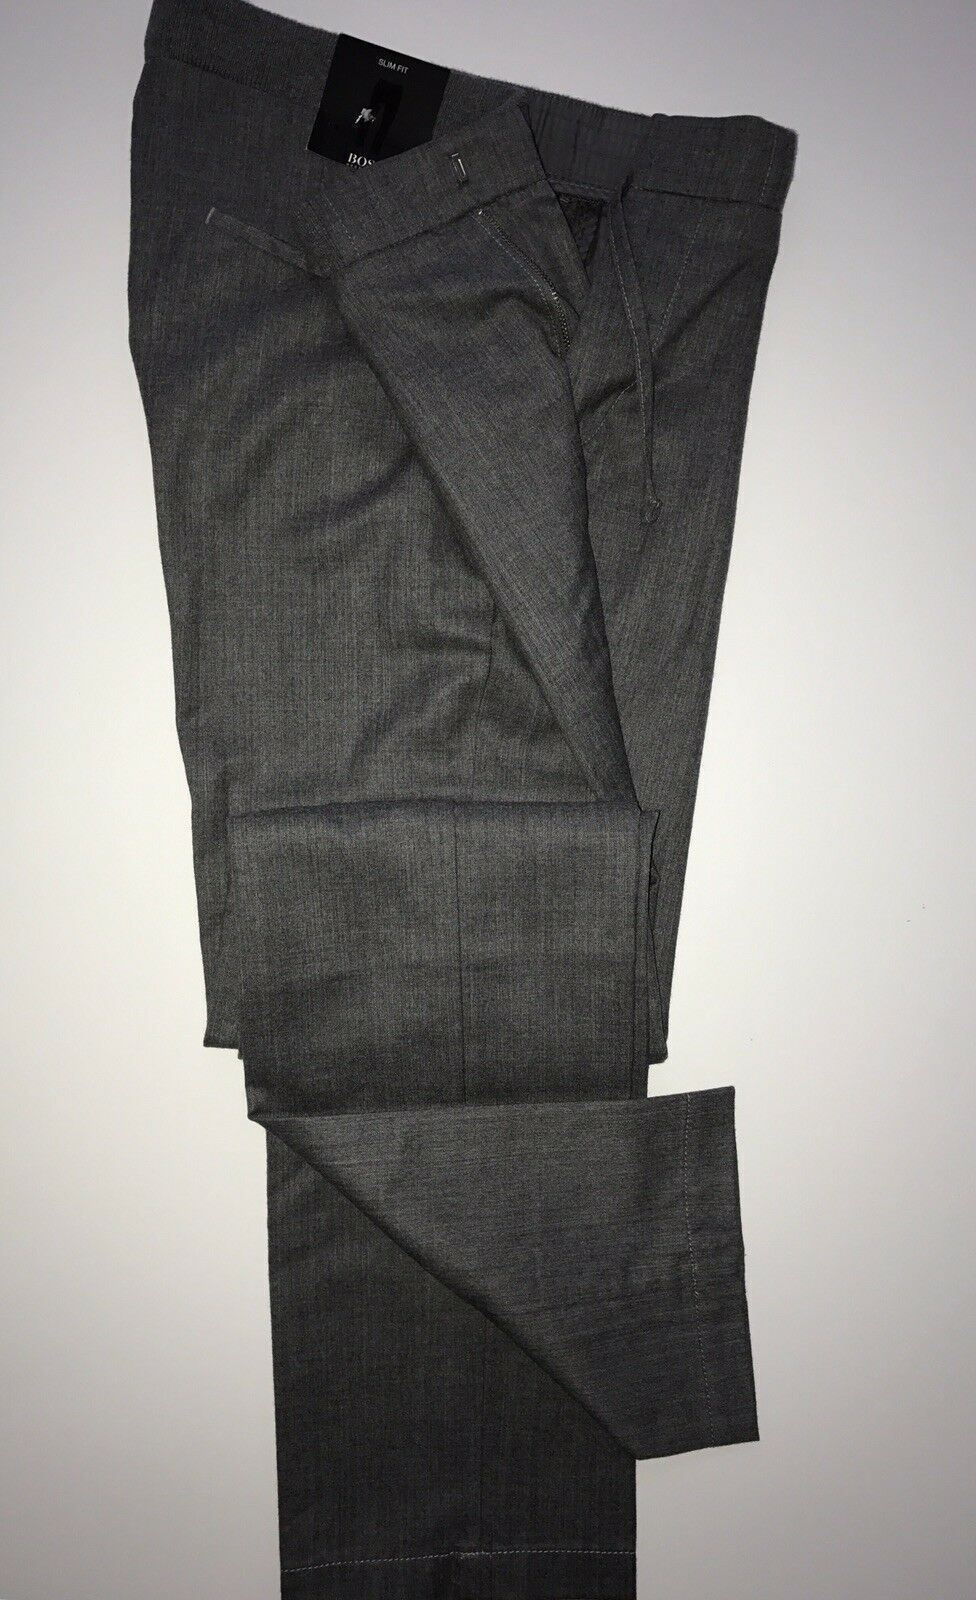 Boss Hugo Boss Rice2 Herren-Anzughose aus Wolle in Dunkelgrau, Größe 36R US 